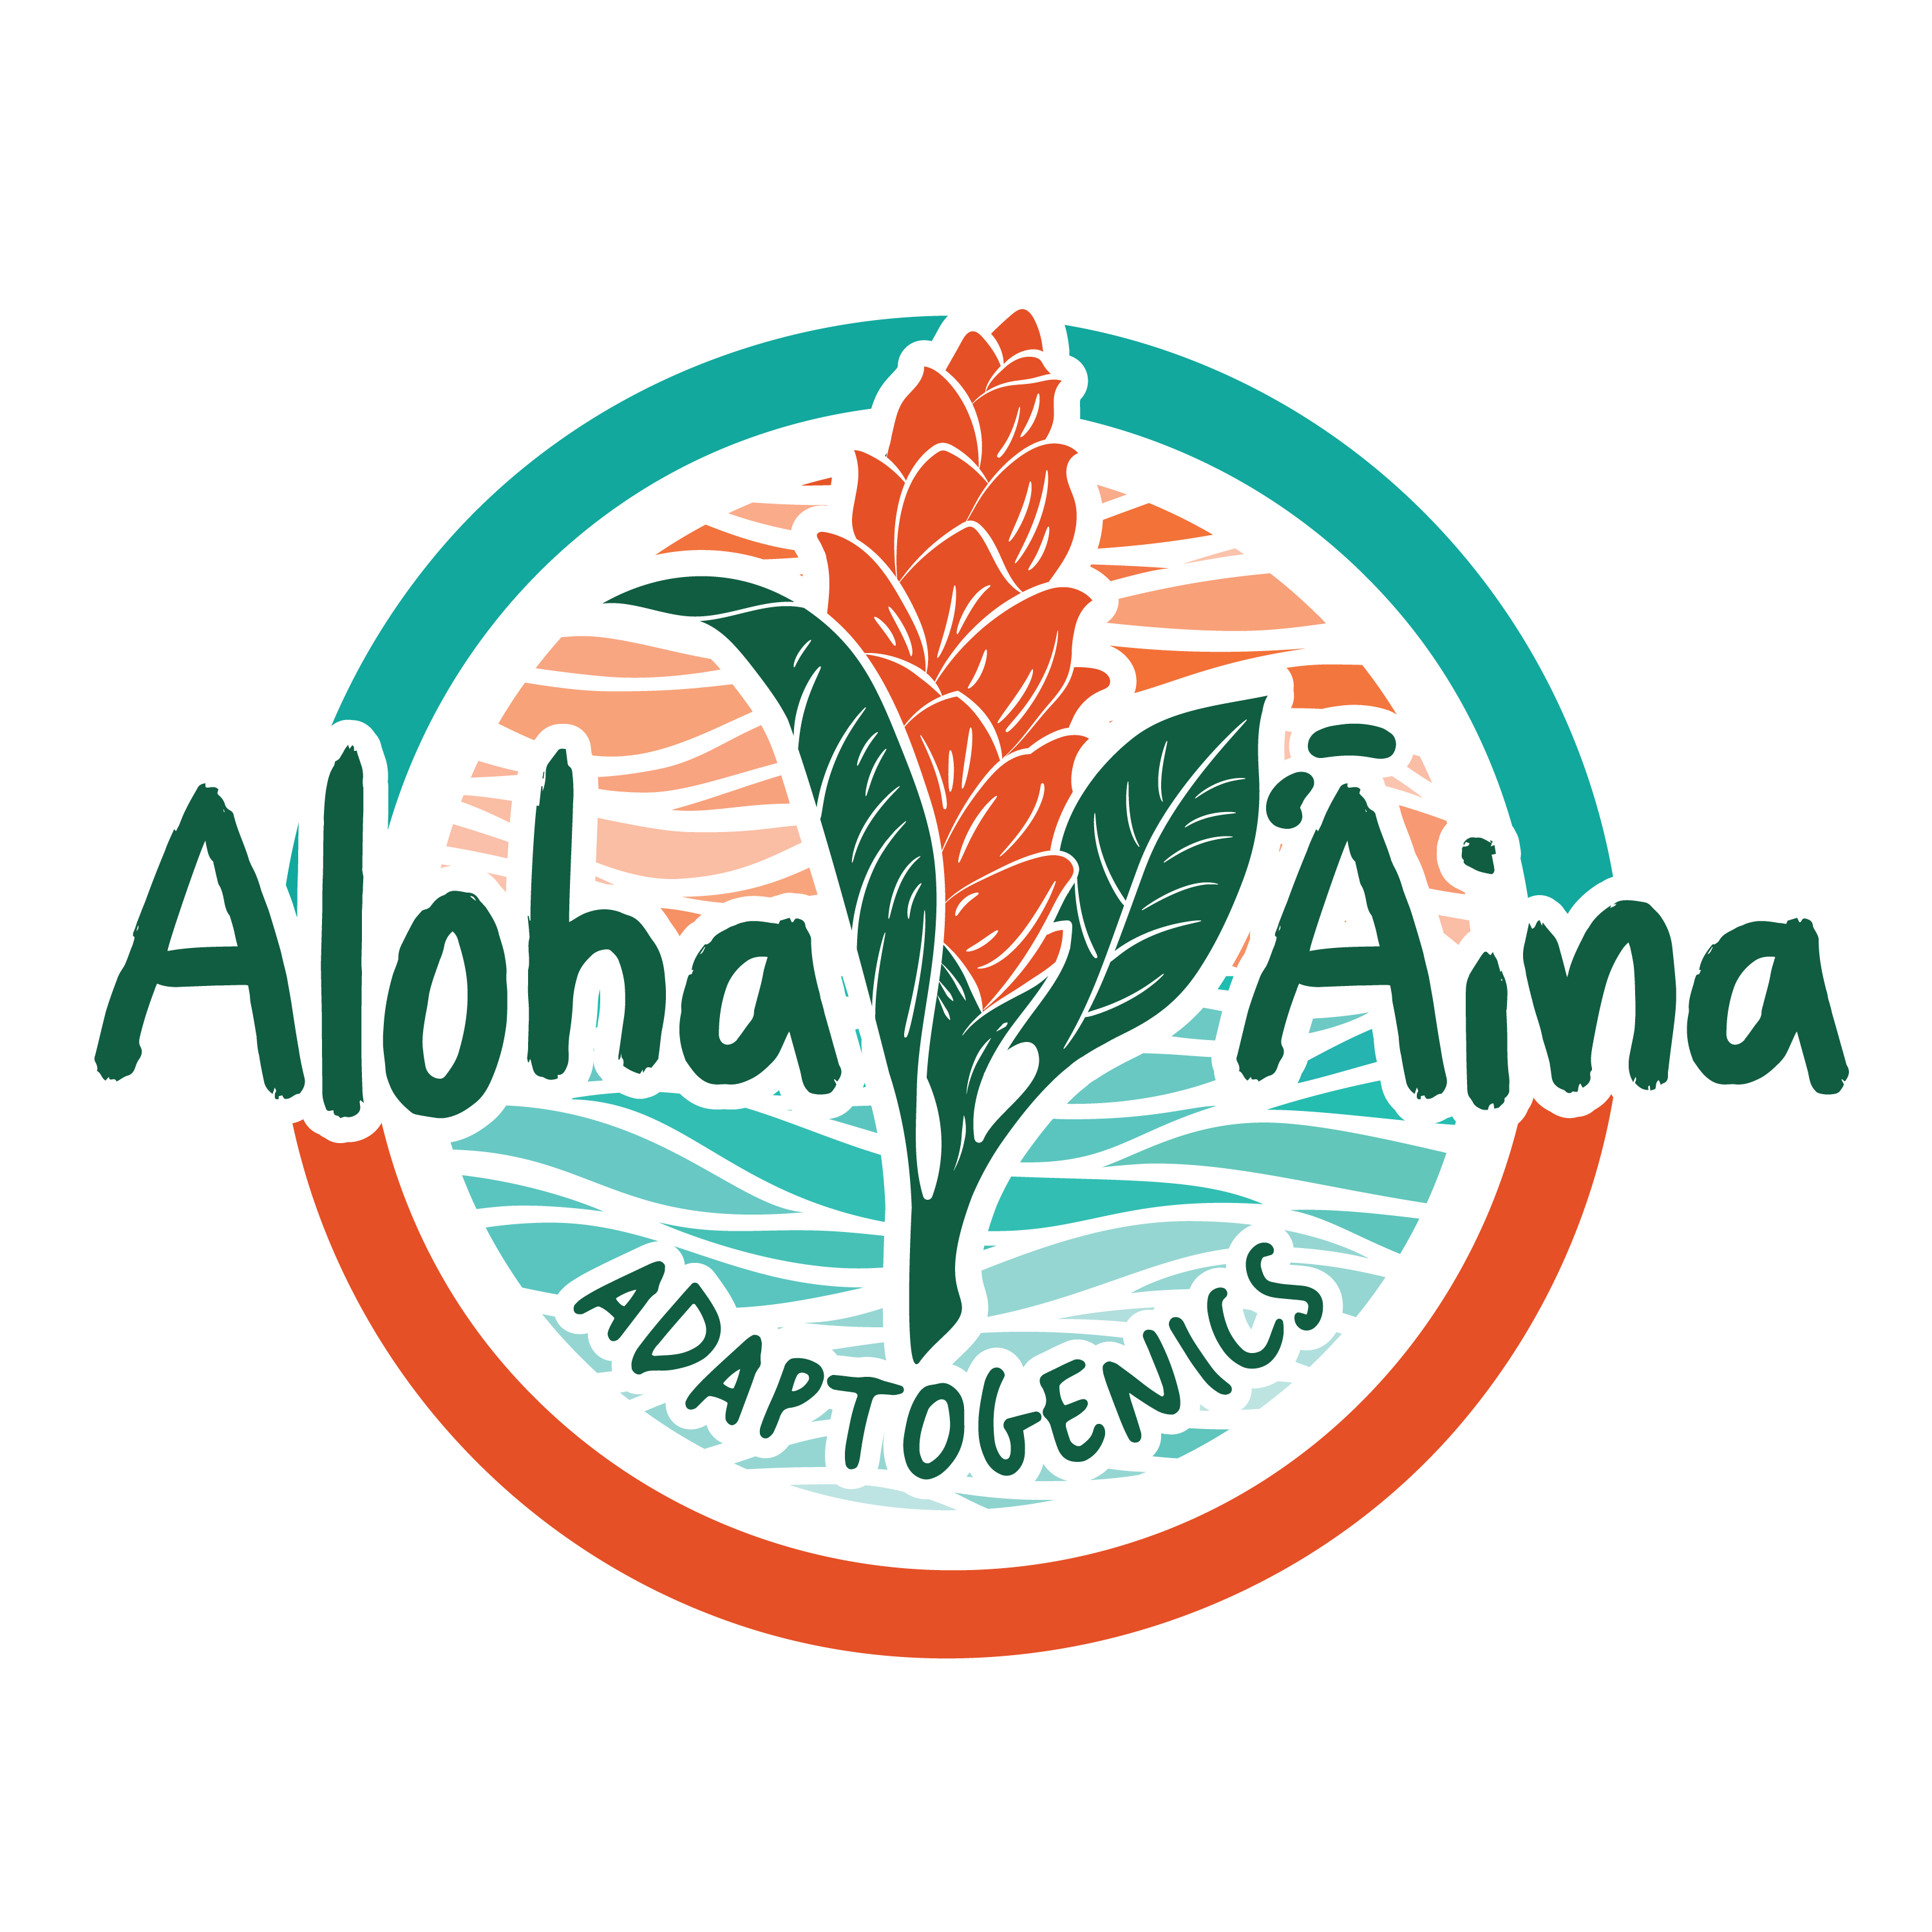 Aloha 'Aina Adaptogenics